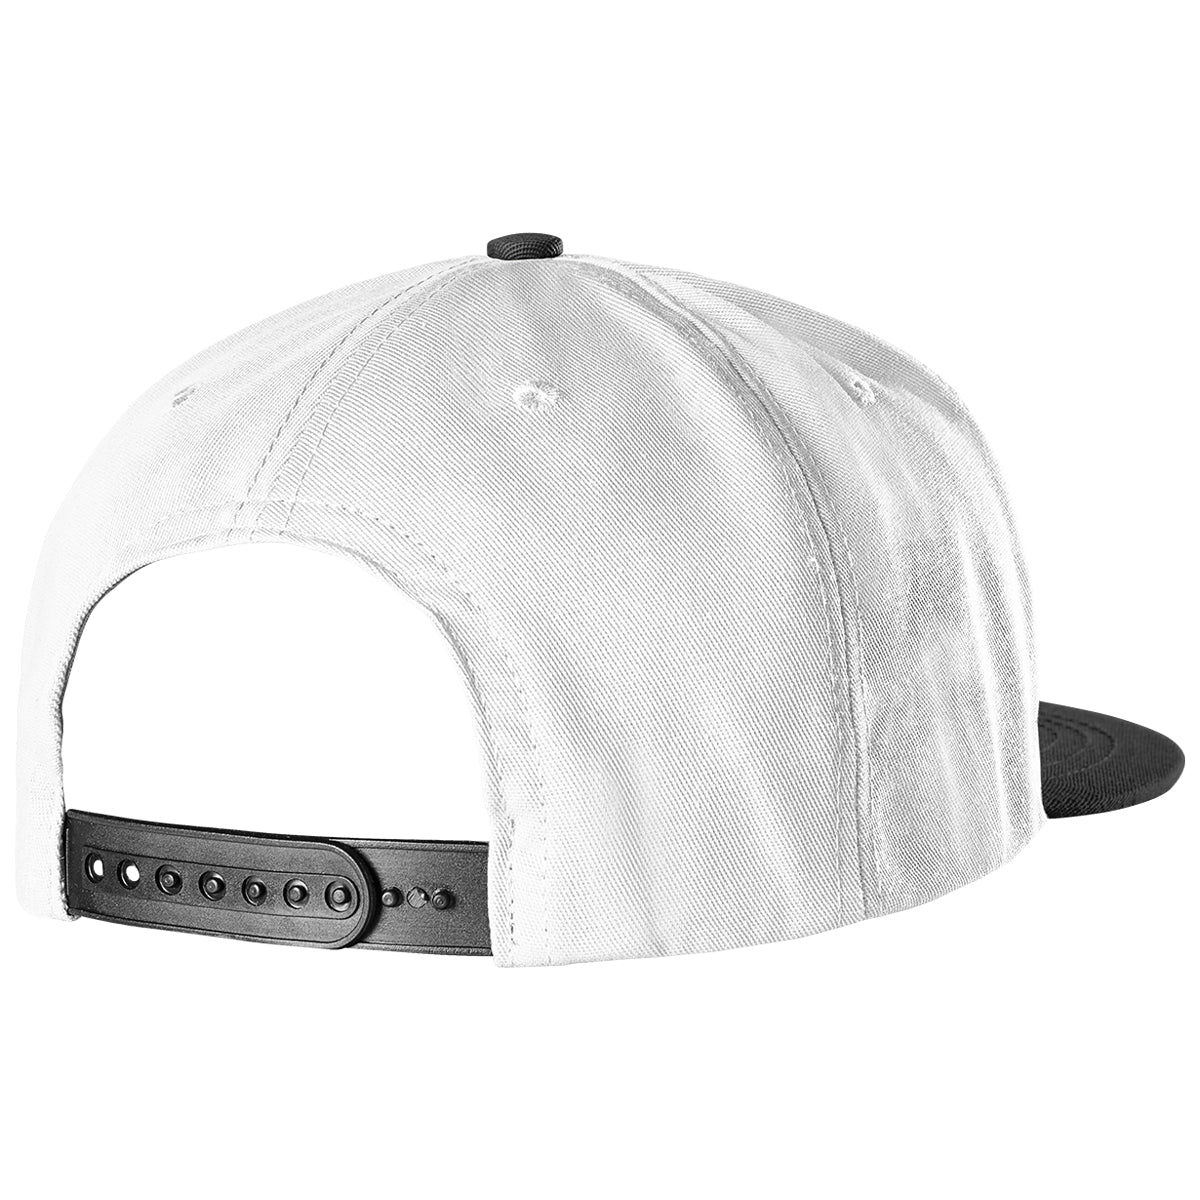 Emerica Endure Destroy Snapback Hat - Black/White image 2